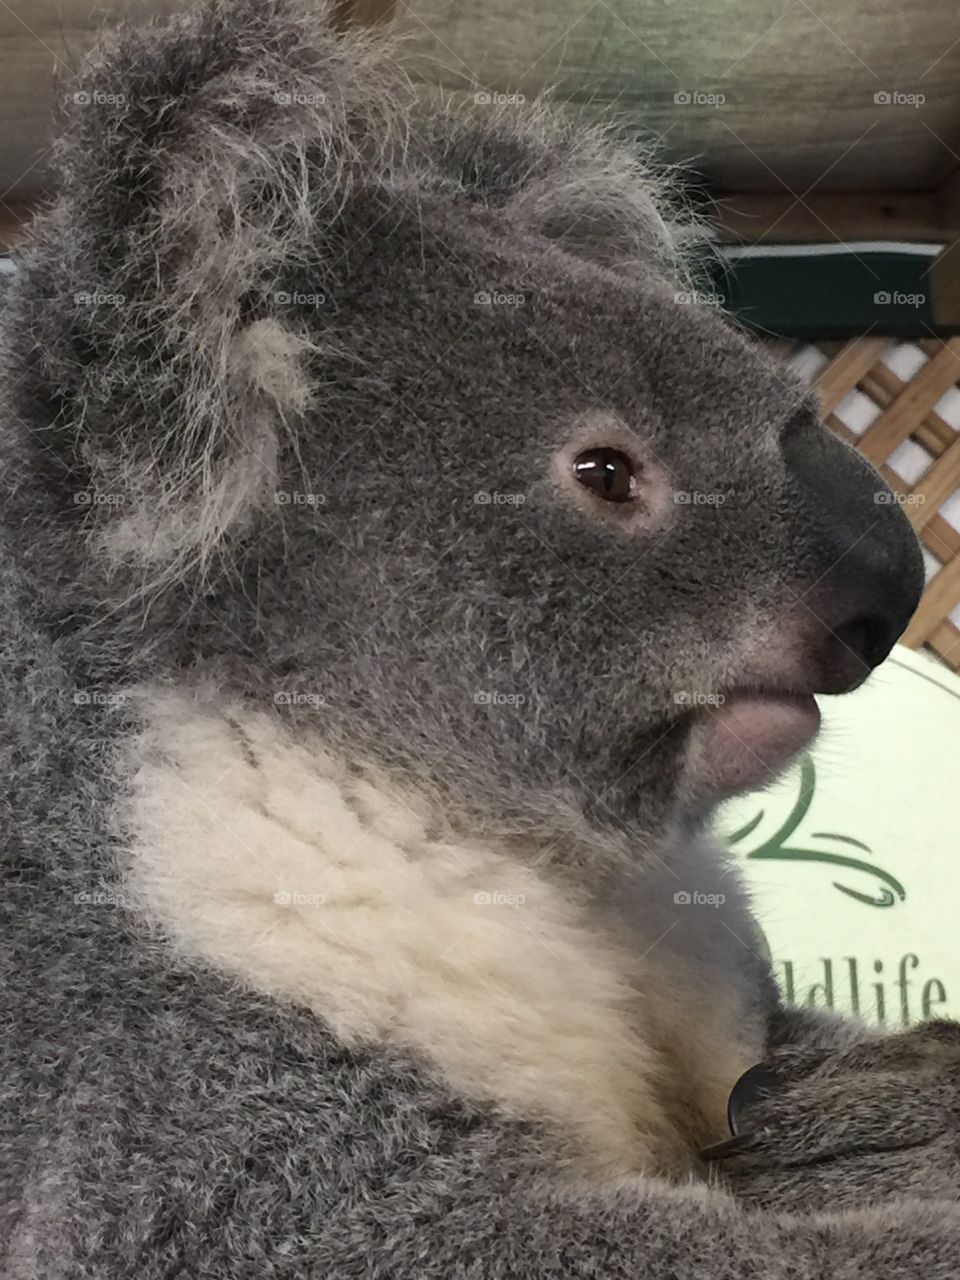 Koala at Featherdale Wildlife Sydney, Australia 